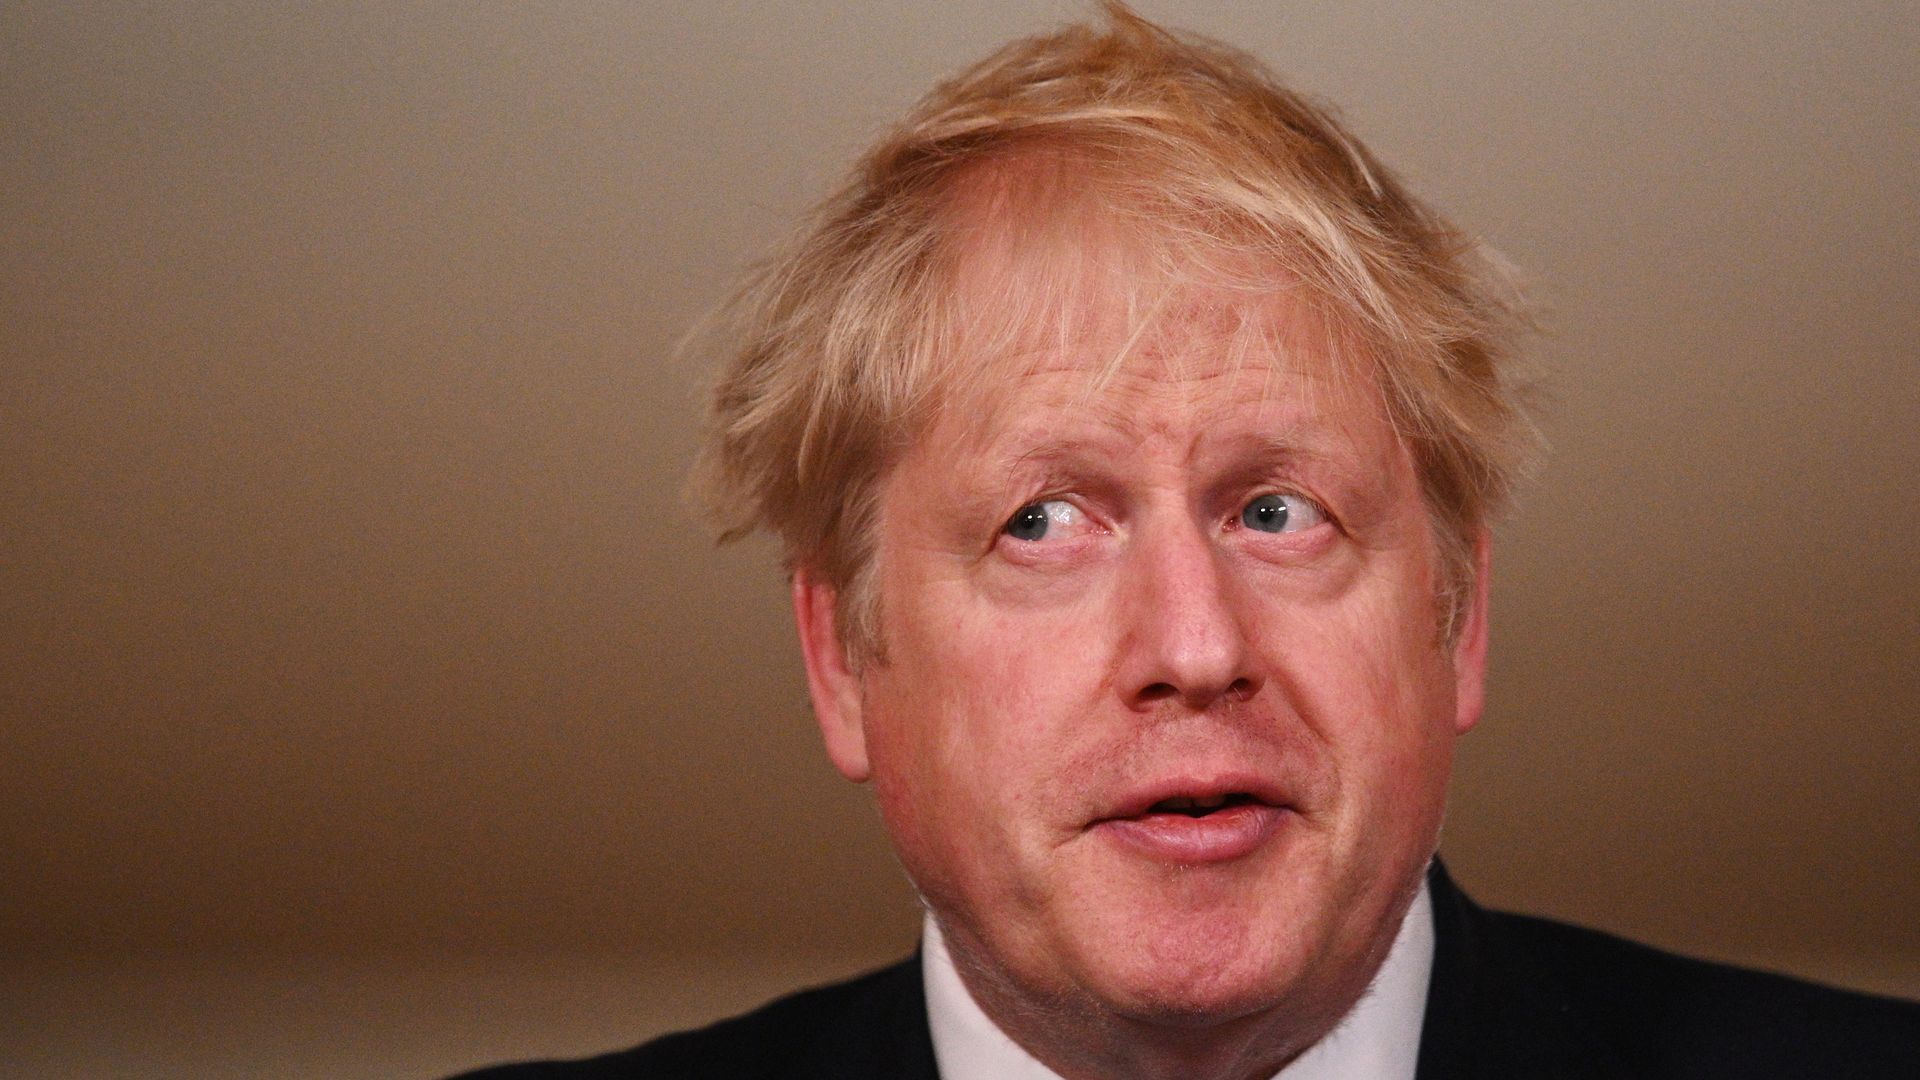 UK Prime Minister Boris Johnson delivers a statement on coronavirus measures on November 5, 2020 in London, England.